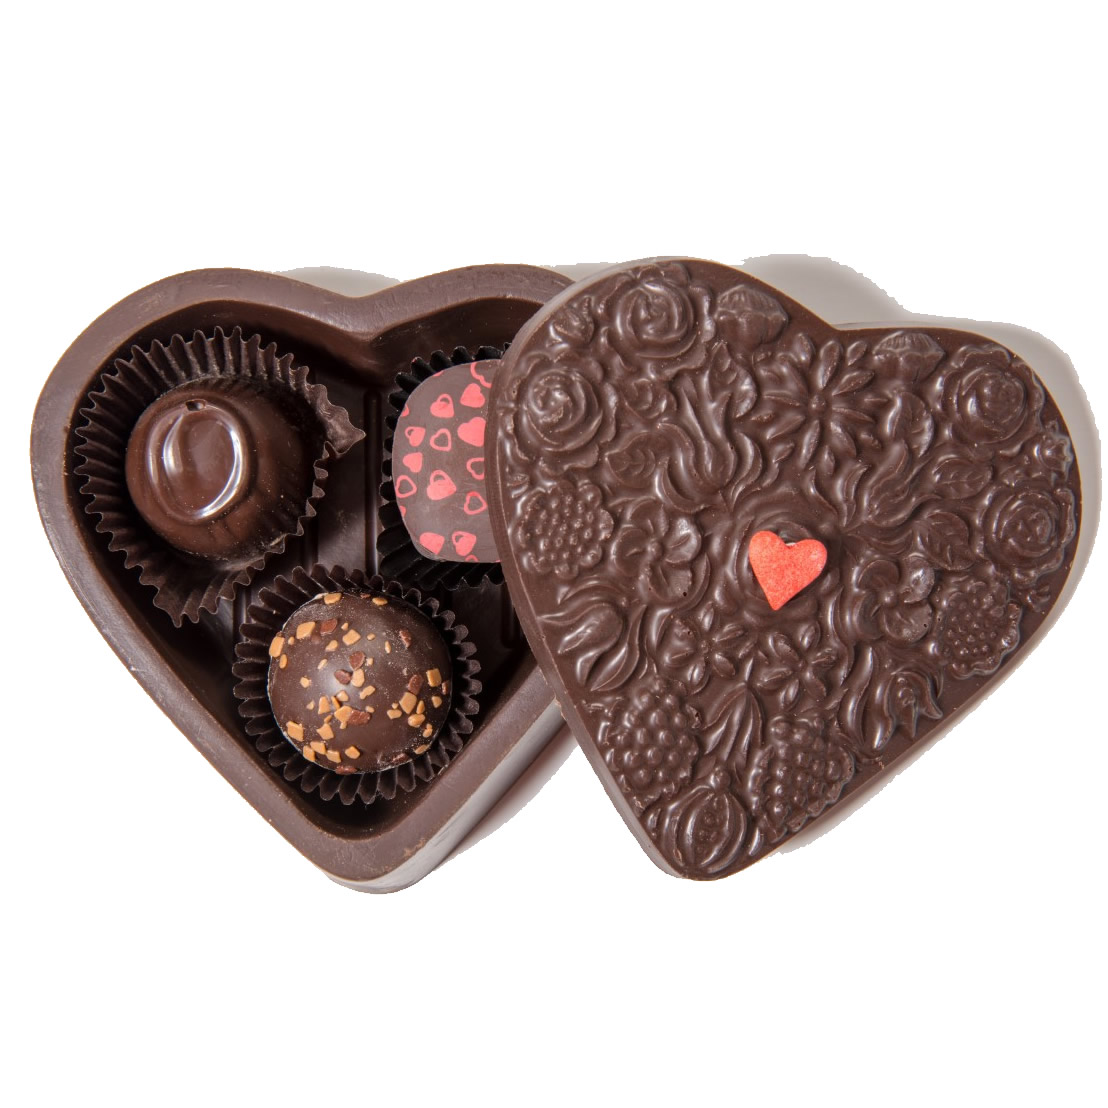 Valentine Edible Chocolate Heart Box - Maitland Chocolate Factory